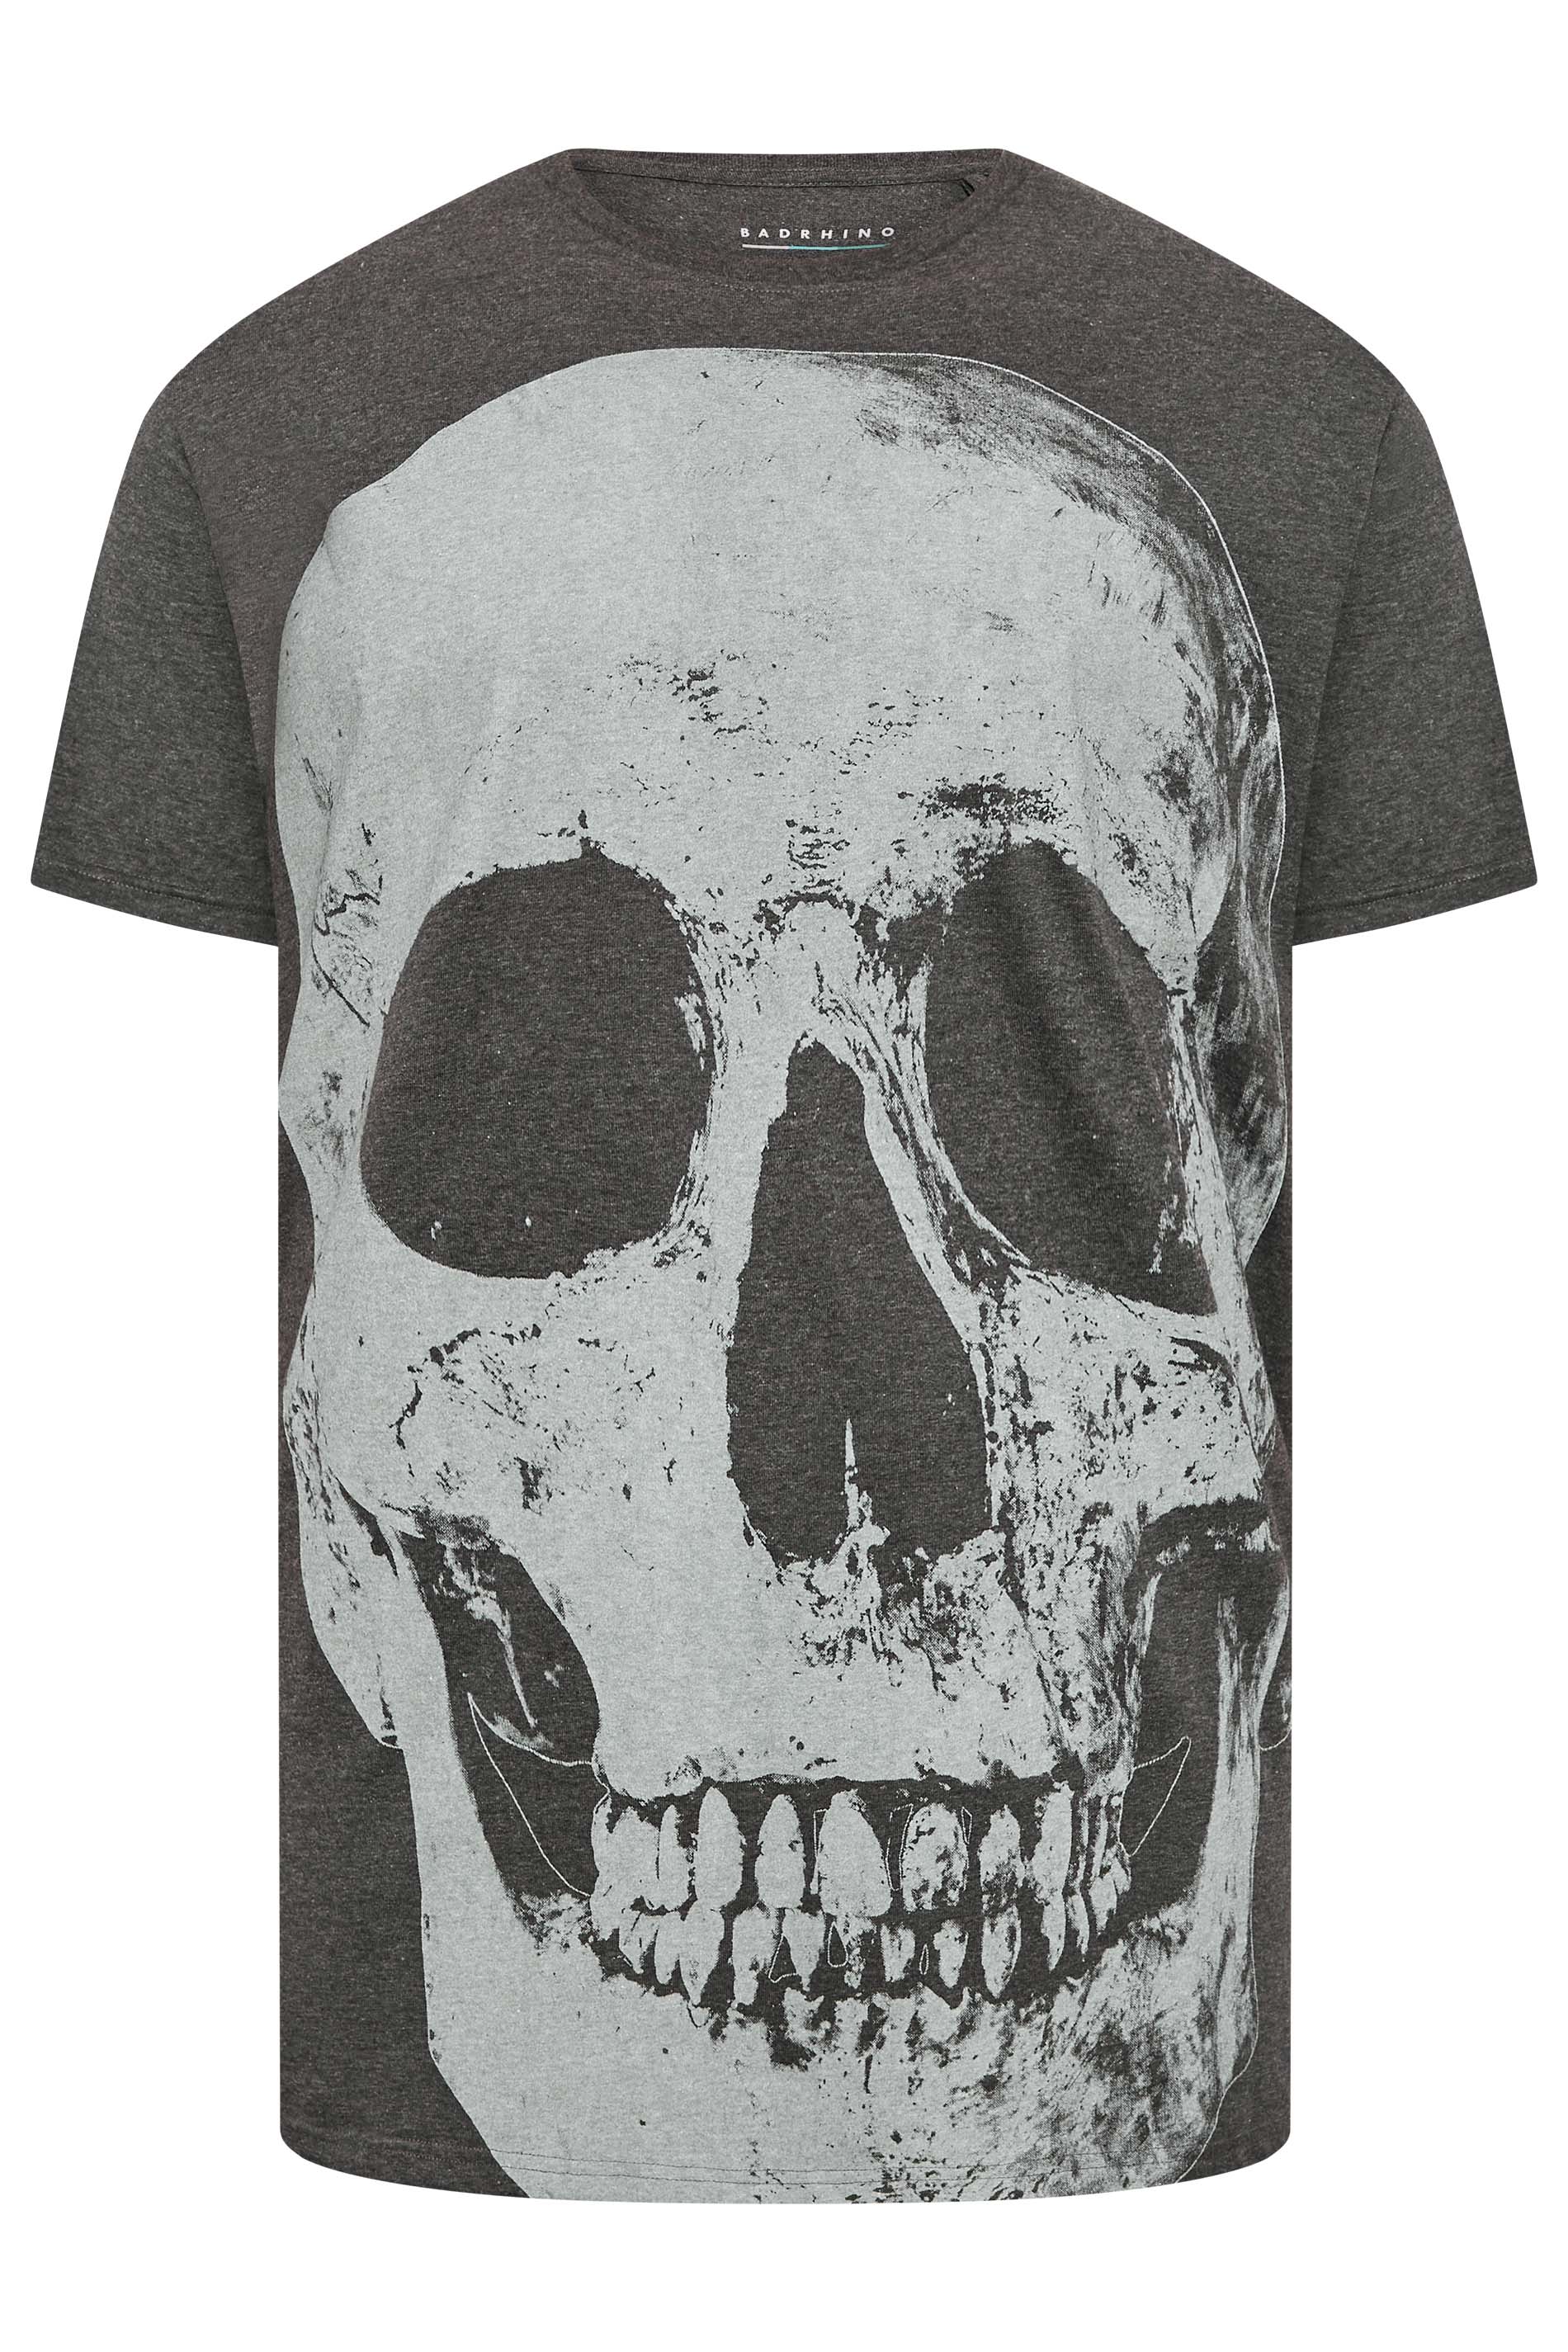 BadRhino Big & Tall Charcoal Grey Skull Print T-Shirt | BadRhino  3